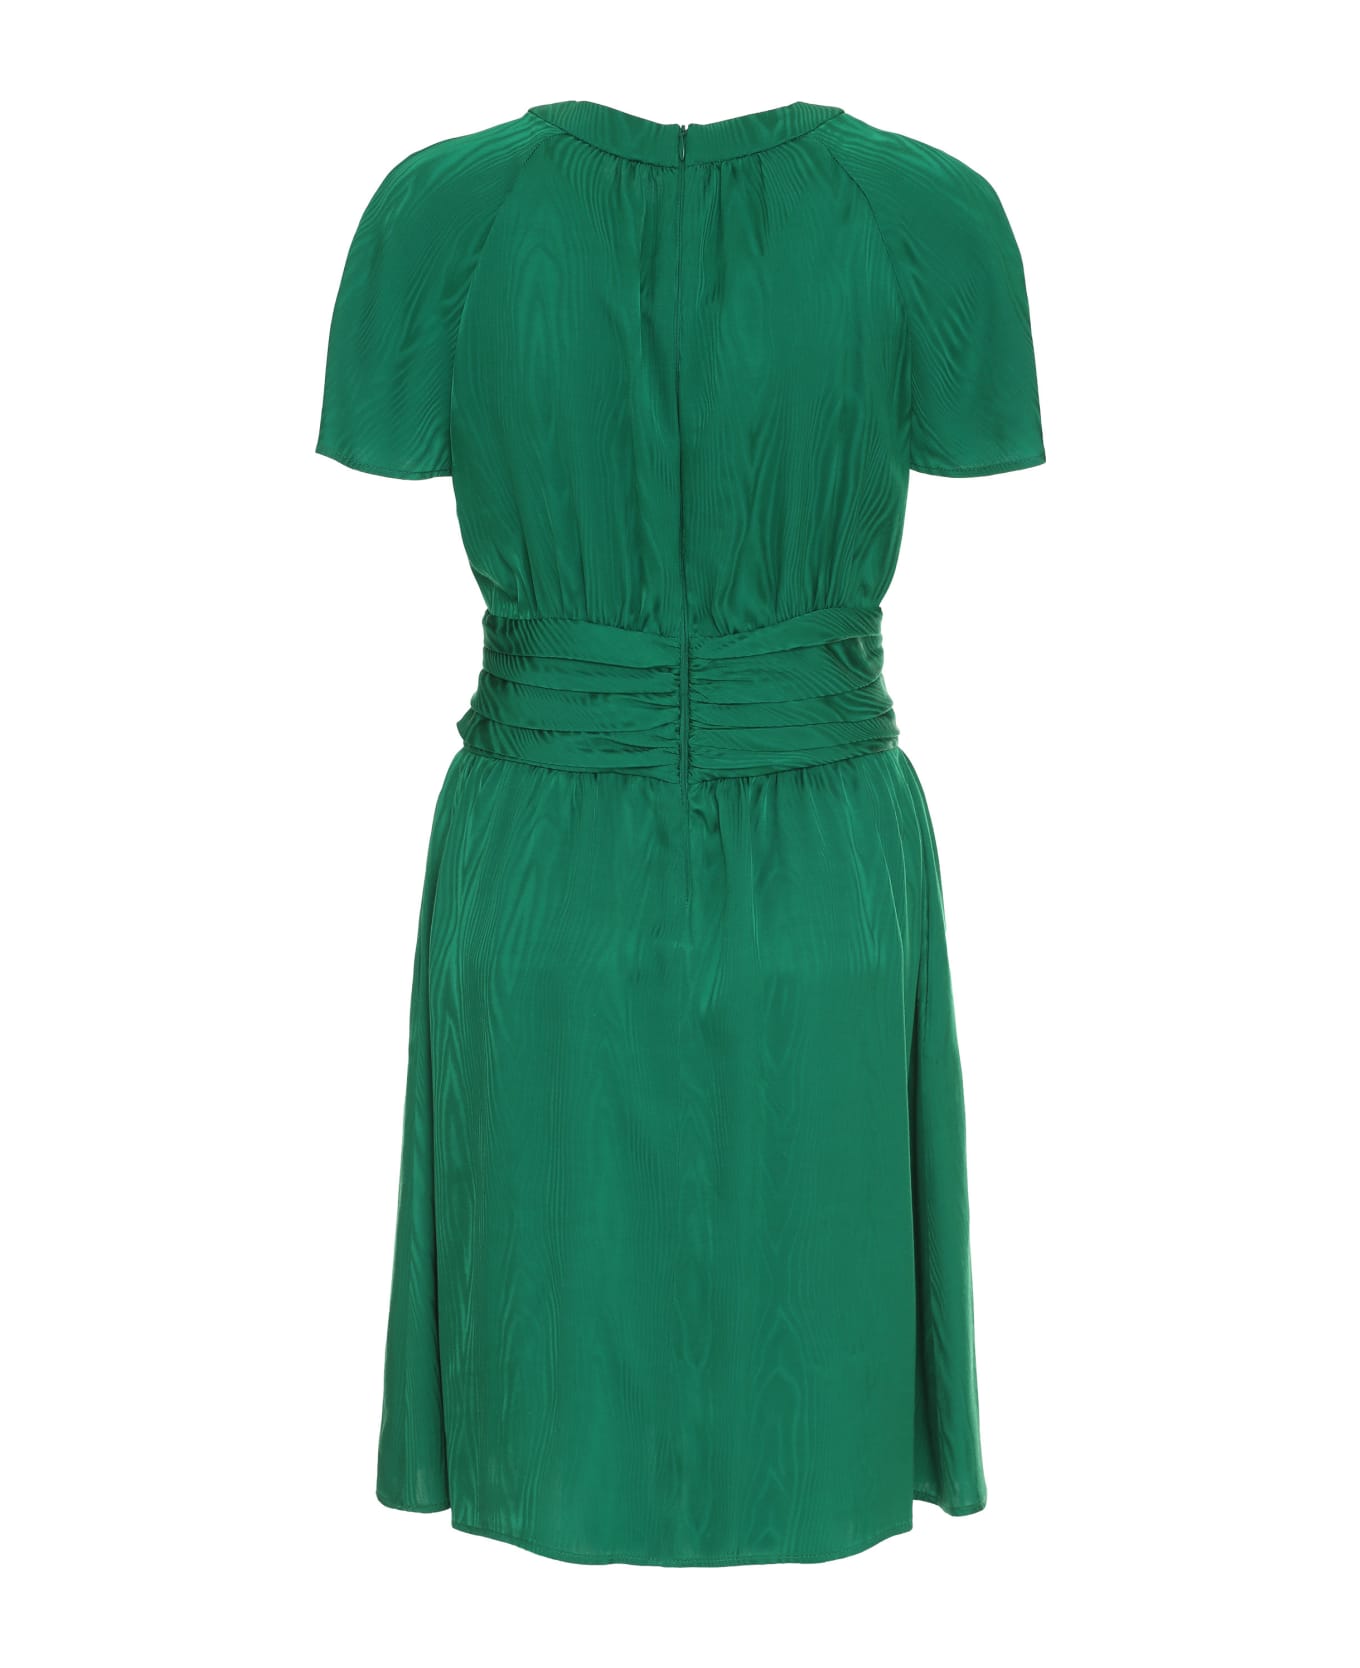 Boutique Moschino Satin Dress - green